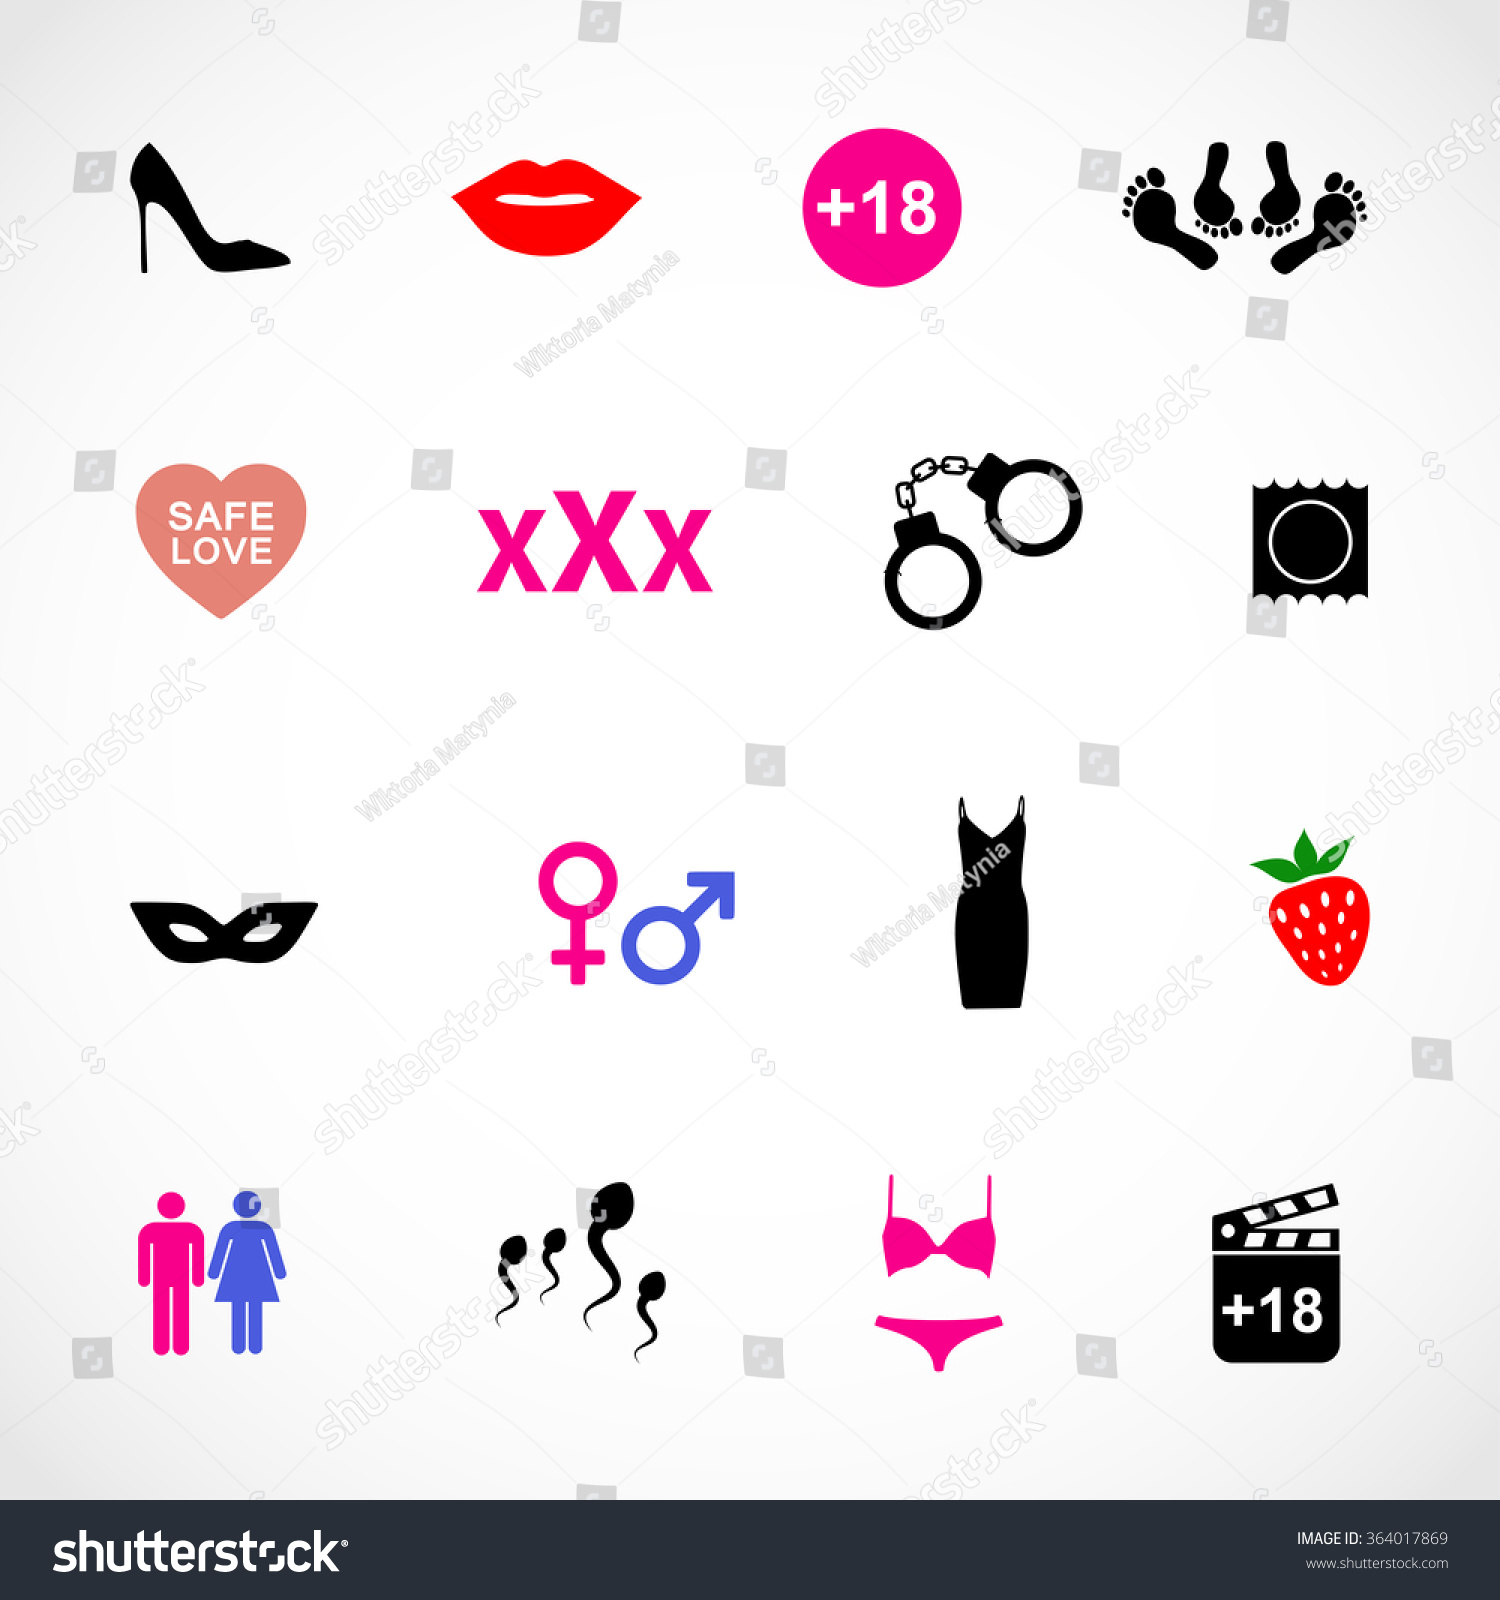 Sex Icon Set Vector 364017869 Shutterstock 5995